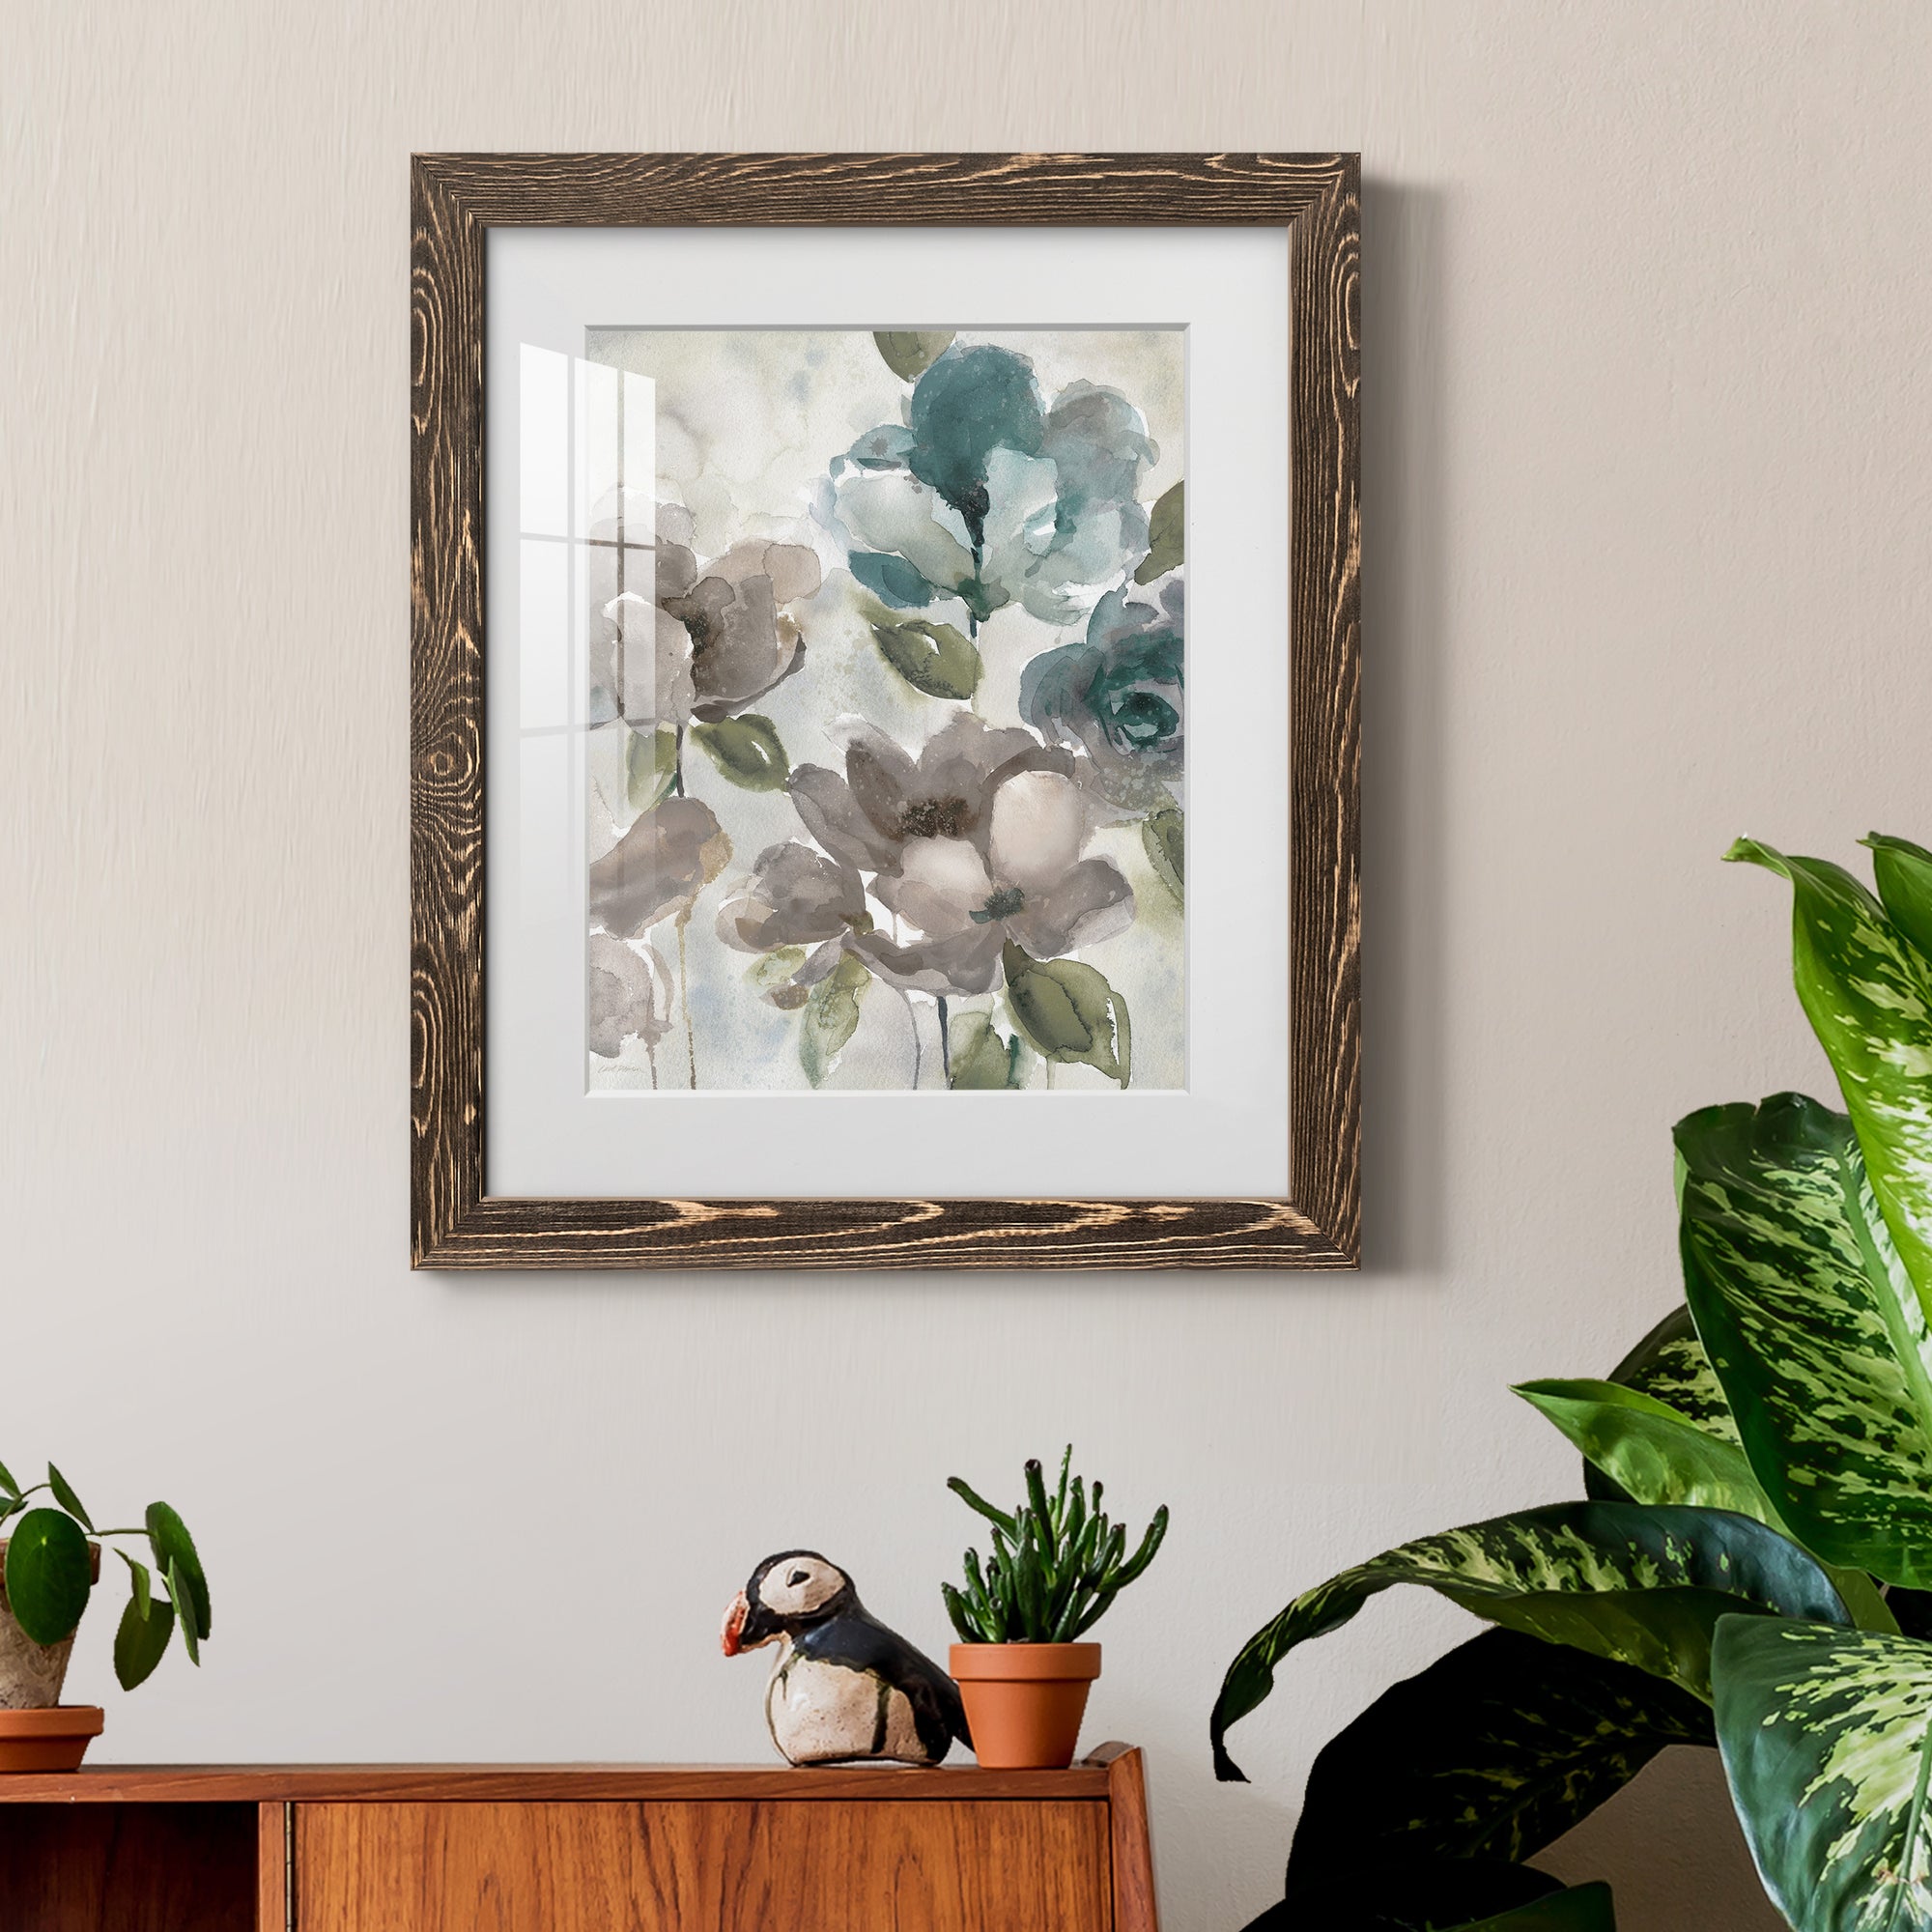 Topaz Garden II - Premium Framed Print - Distressed Barnwood Frame - Ready to Hang